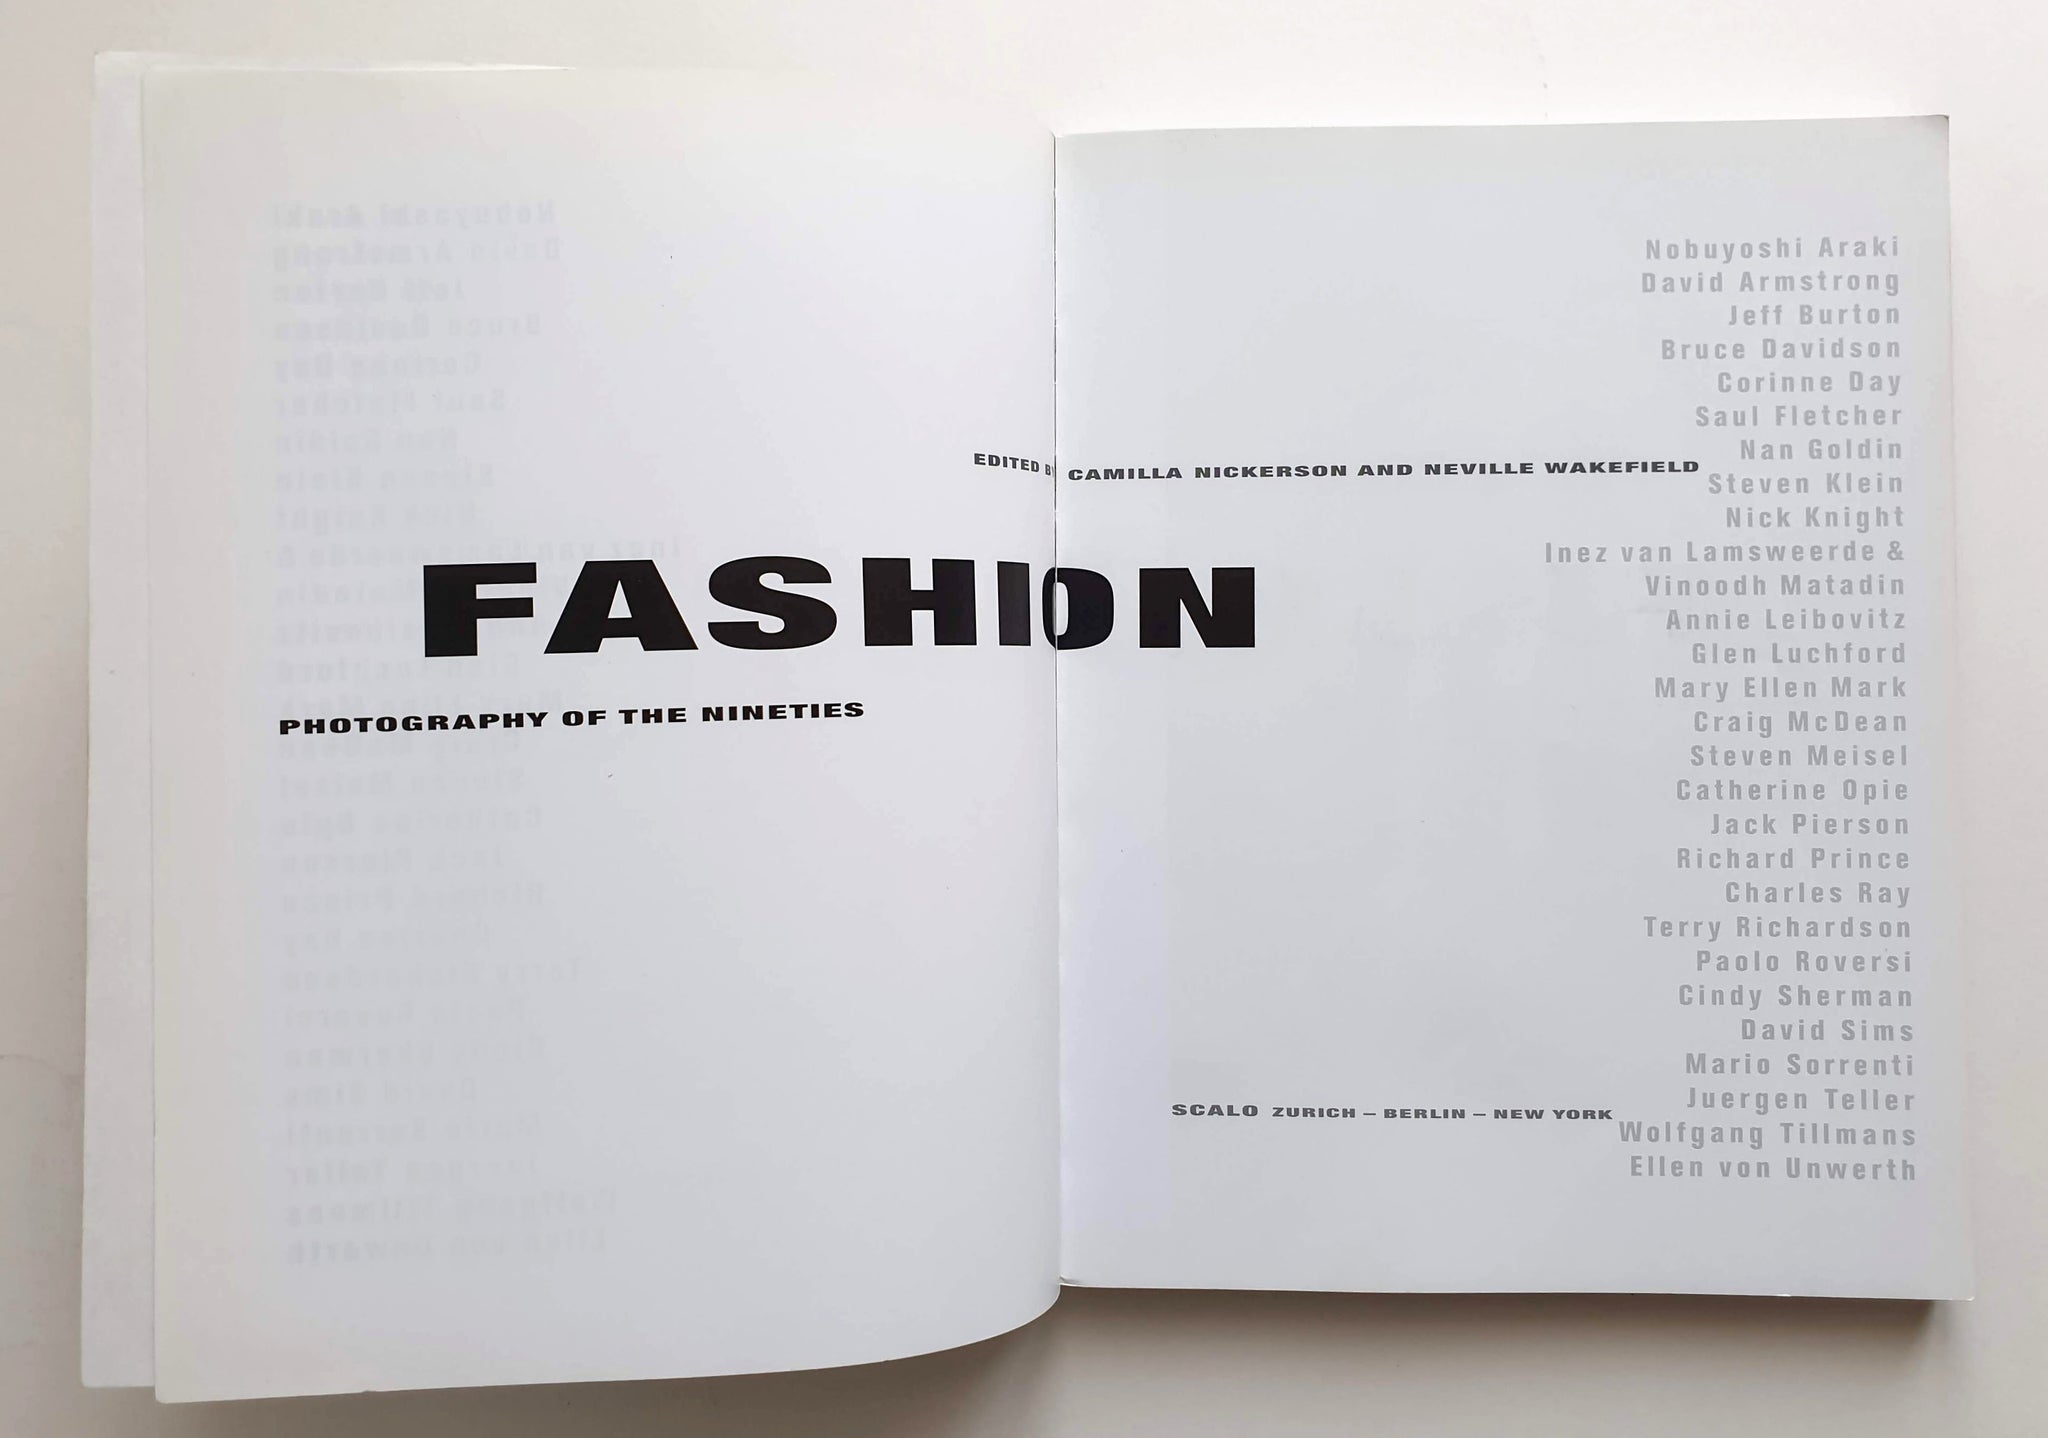 Camilla Nickerson and Neville Wakefield (eds) - Fashion